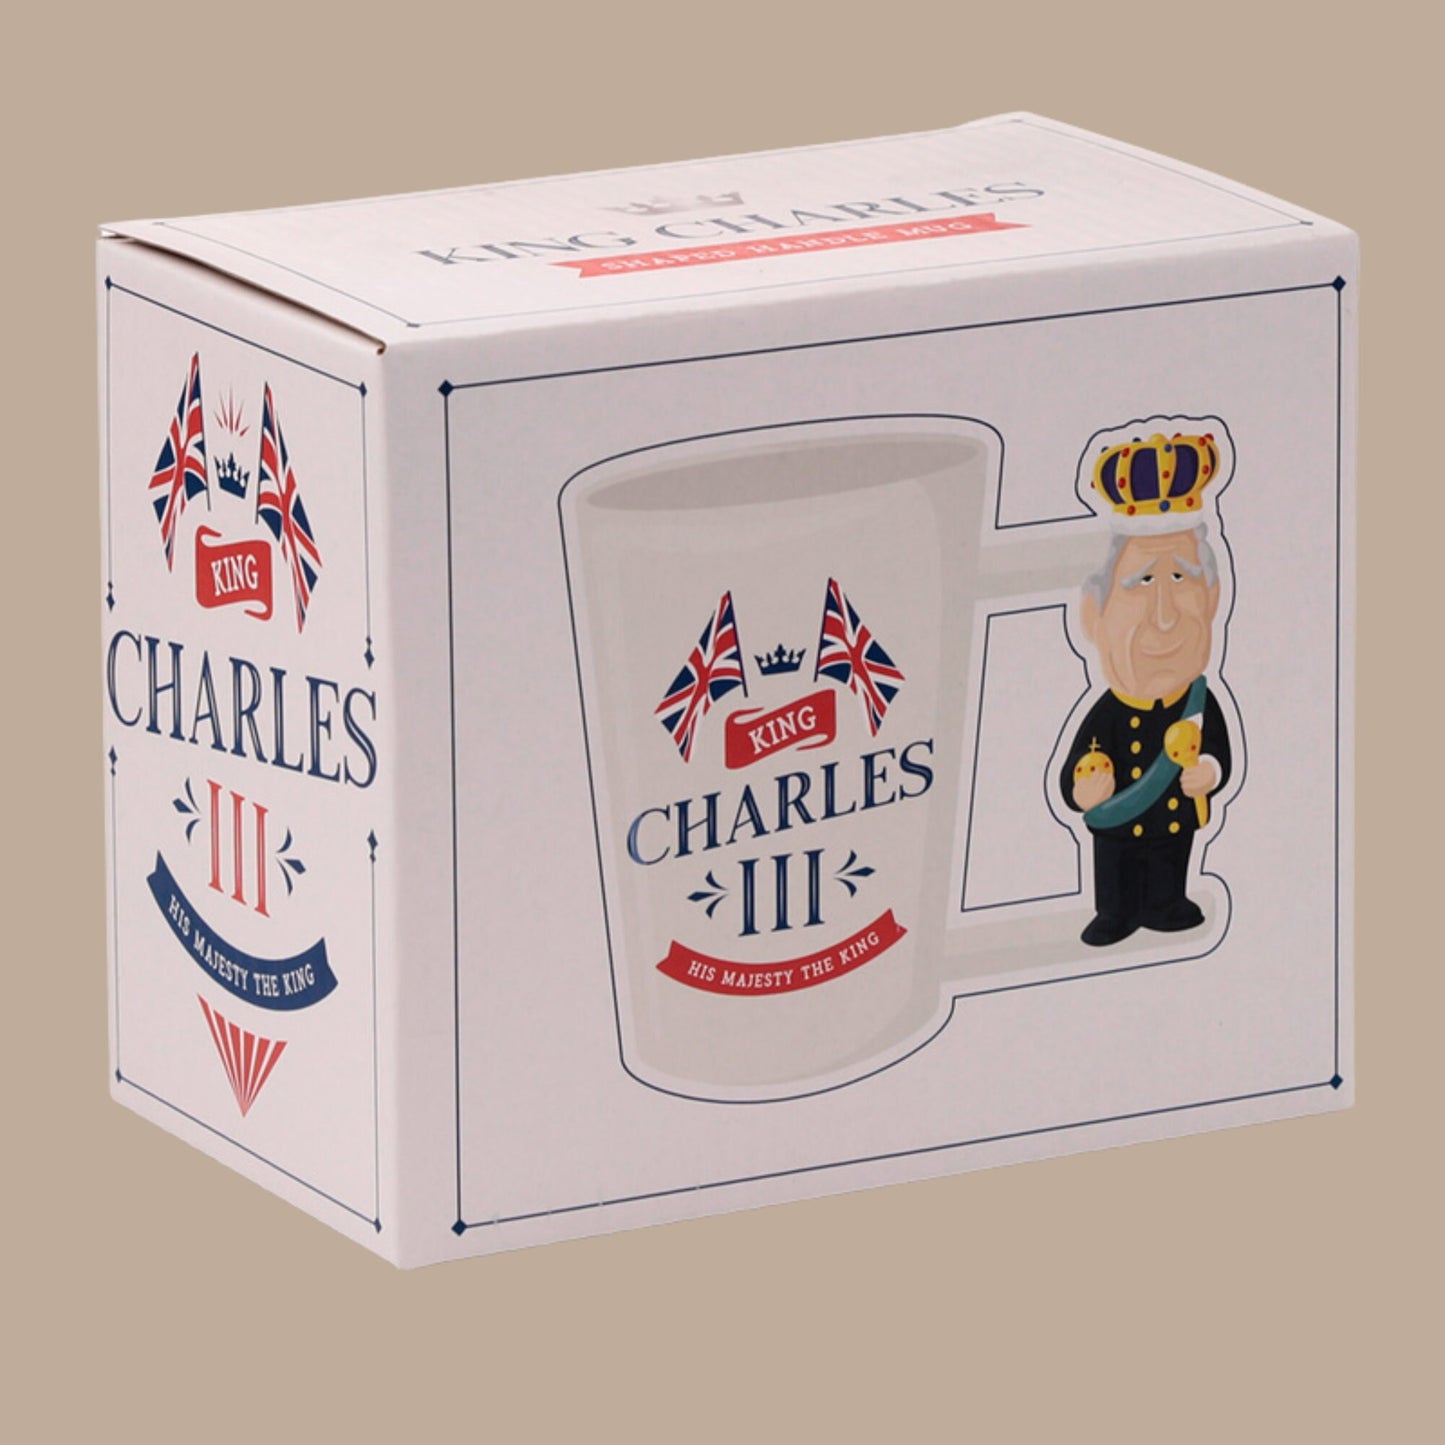 King Charles Handle Mug Monarchy Lover Gift Present For Royalist Ideal Gift Fun Novelty Royal Family Memorabilia Reigning Monarch Souvenir